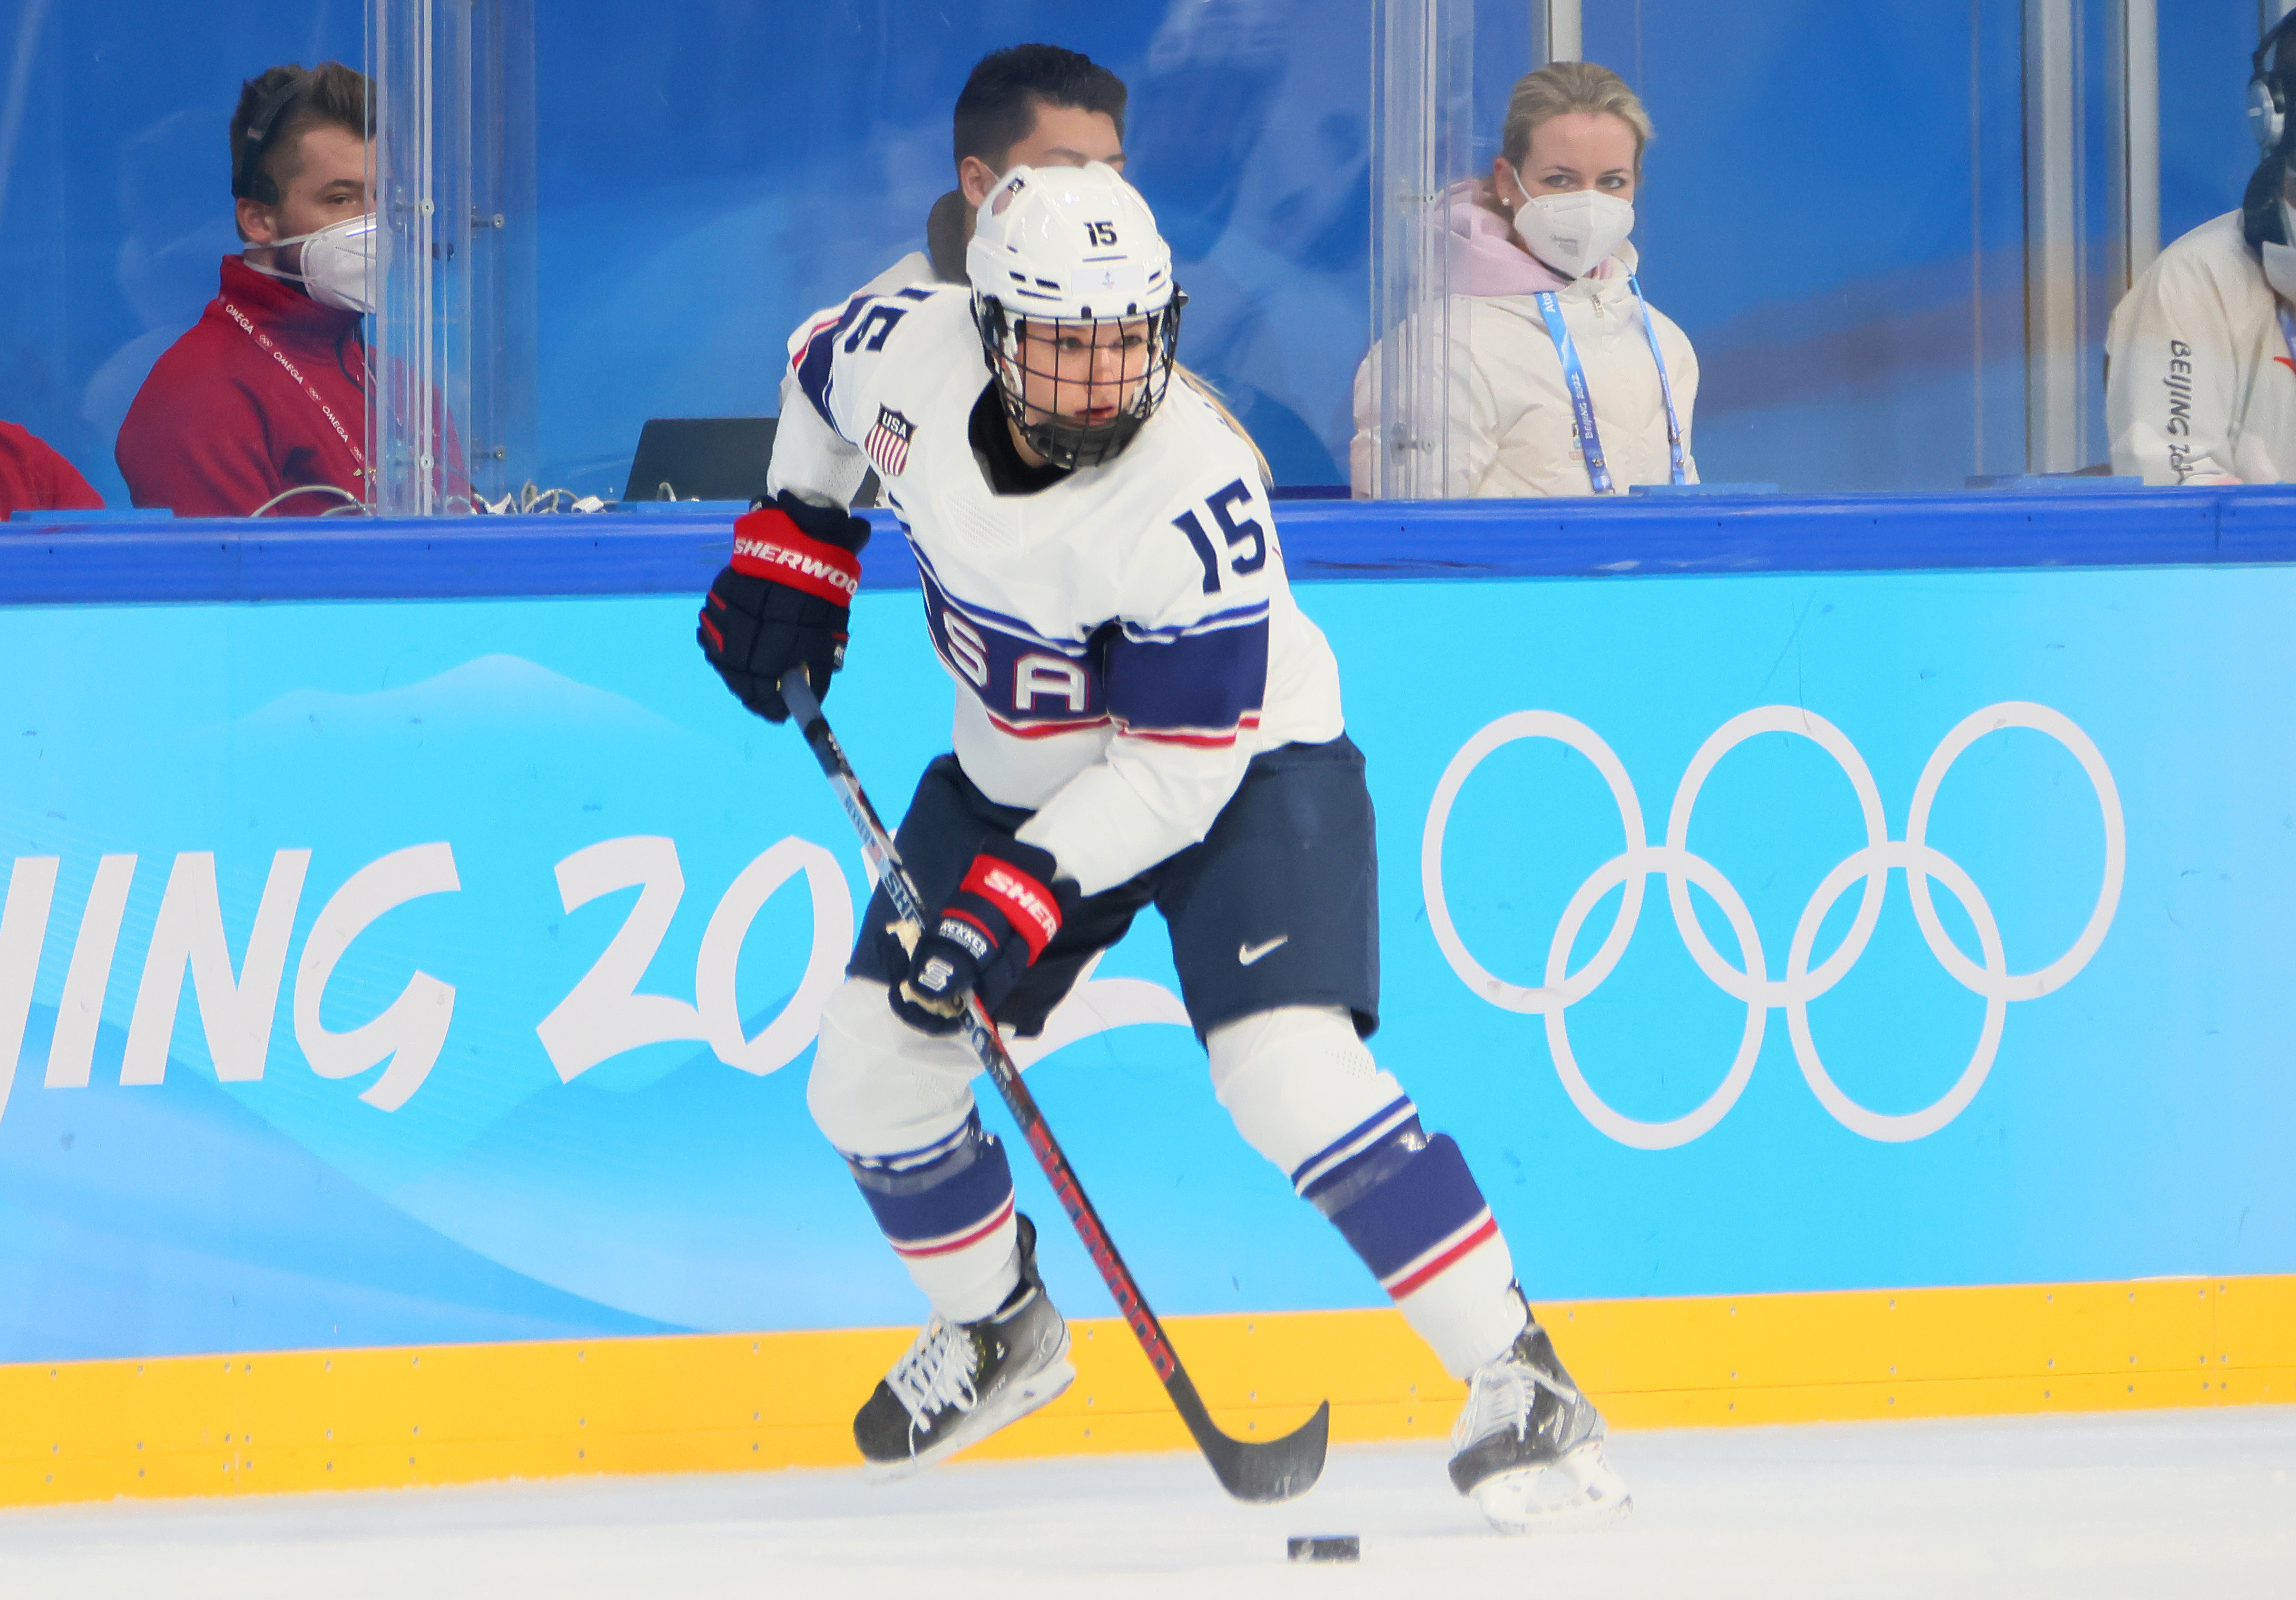 3-time USA Hockey Olympian Brianna Decker retires